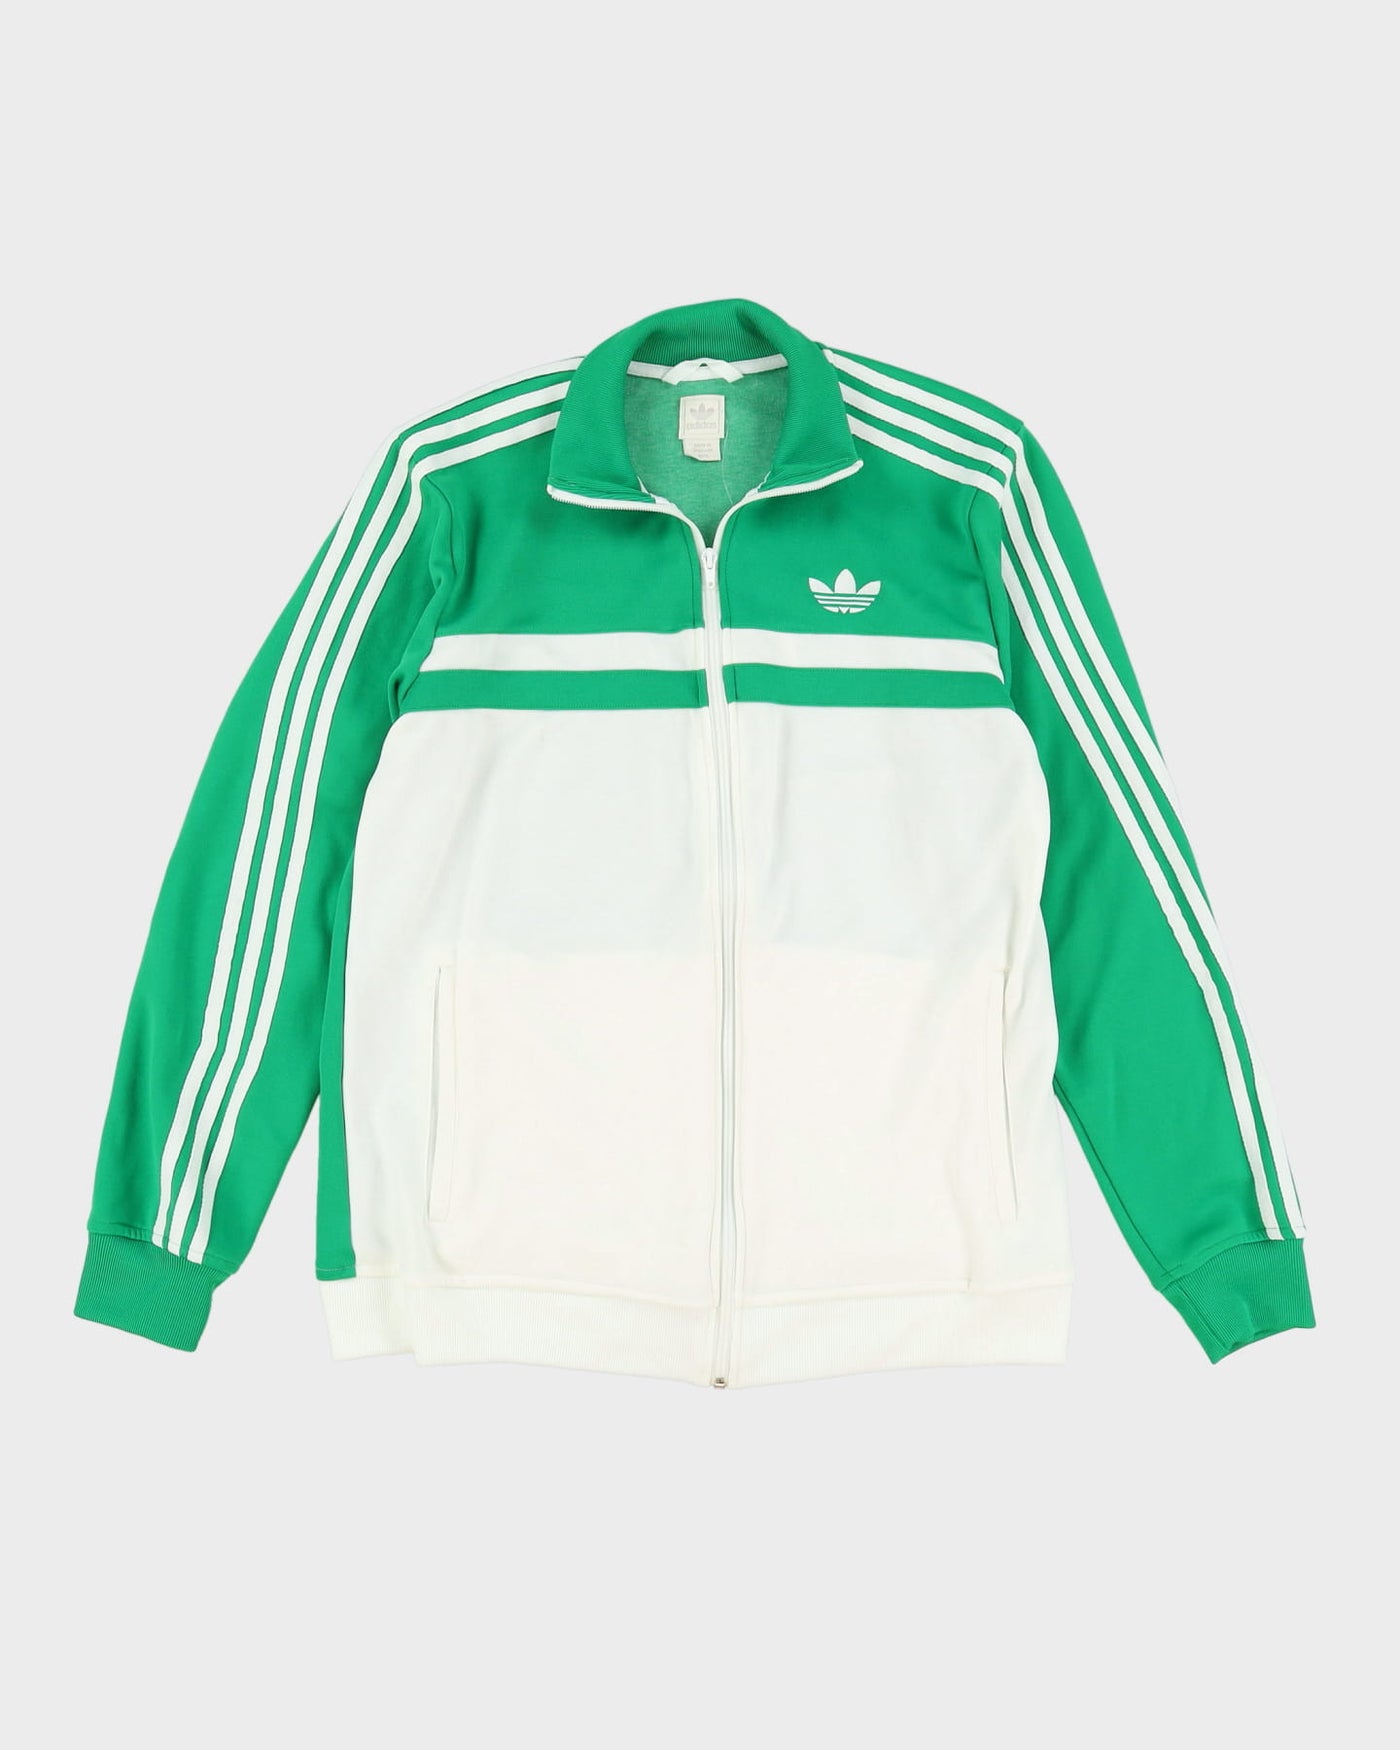 Adidas Green / White Track Jacket - M